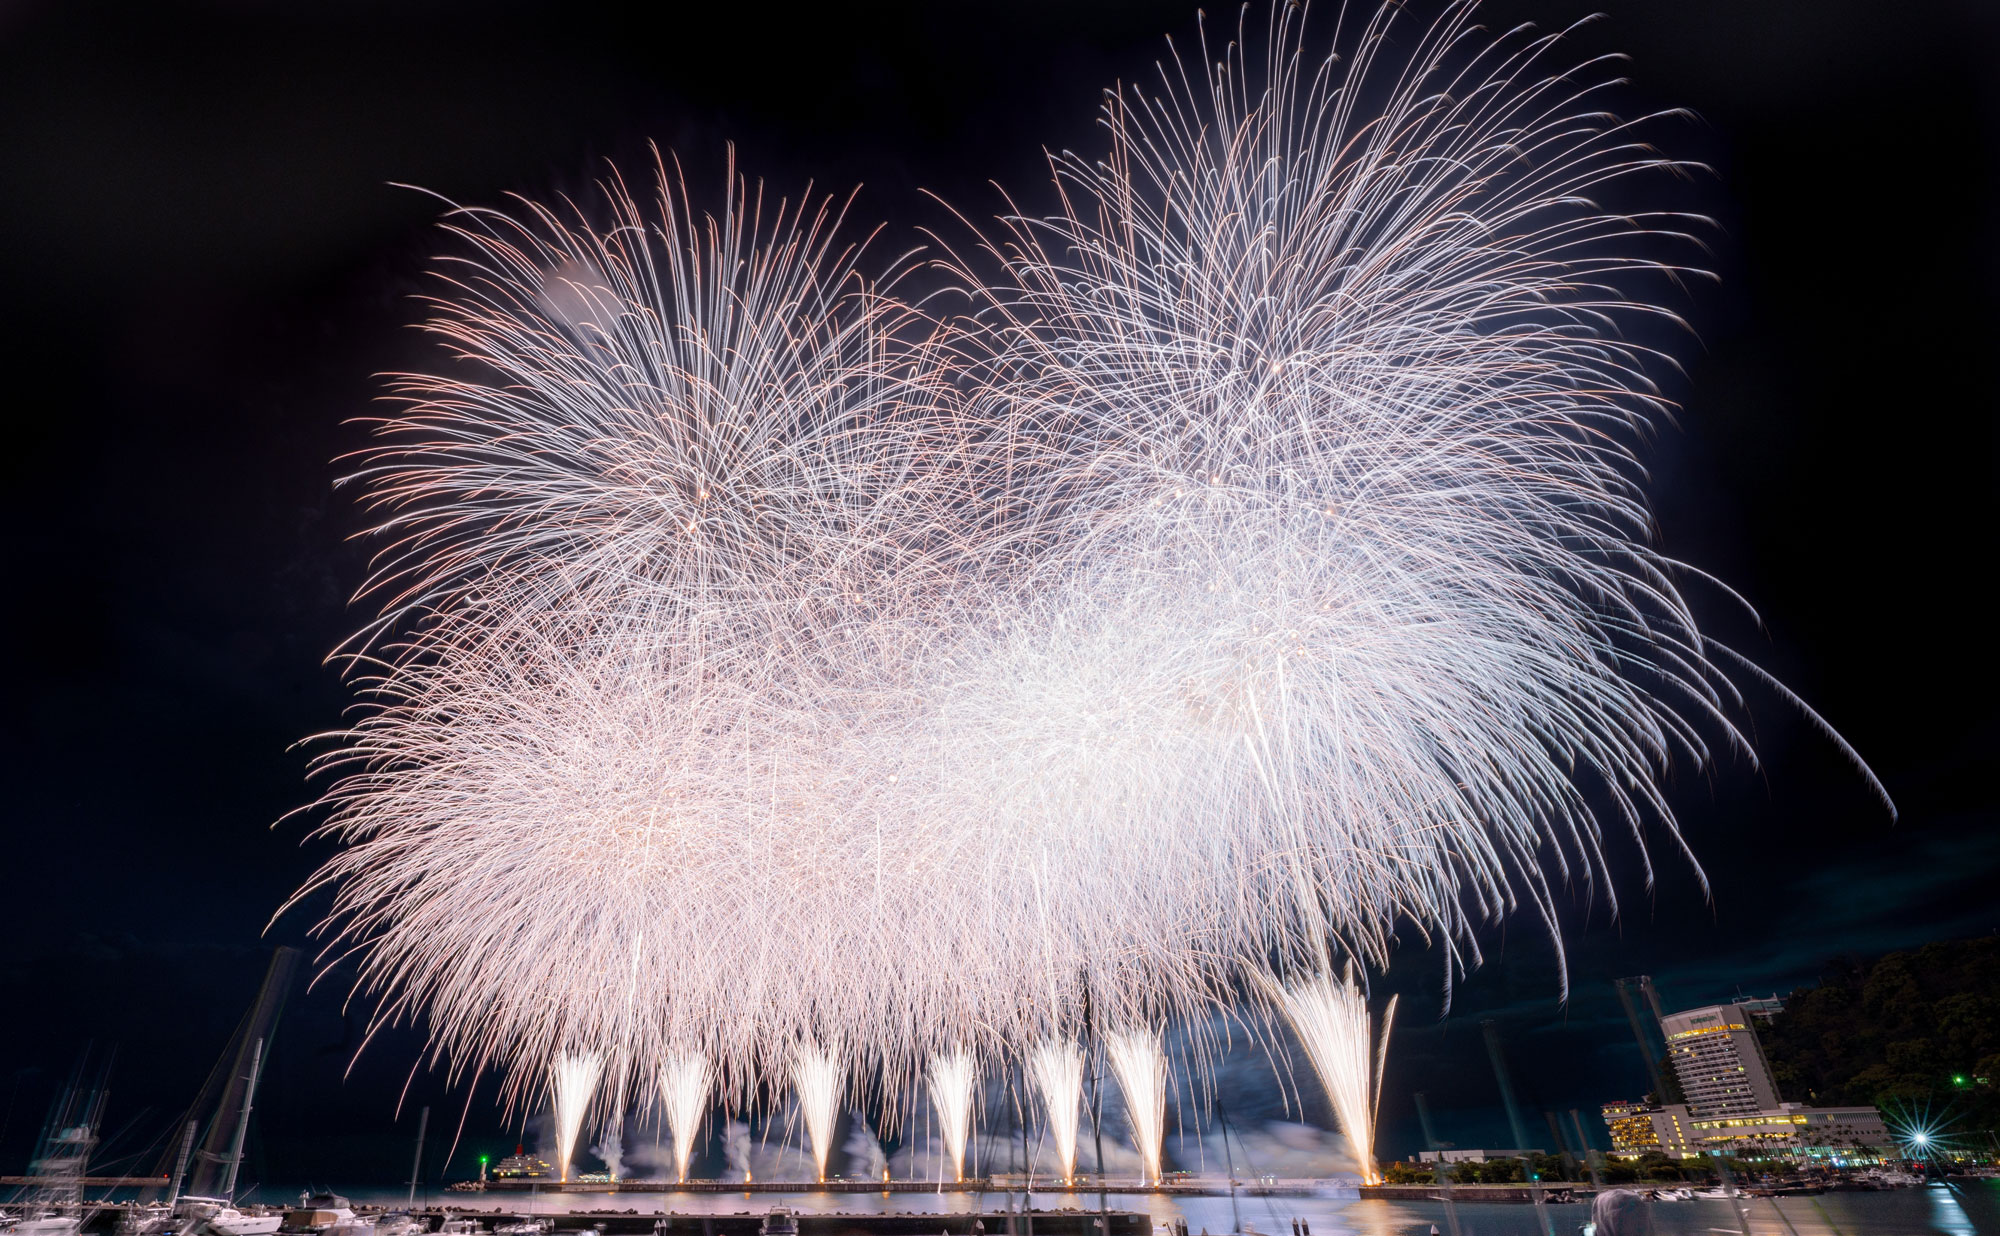 Atami Fireworks Festival Final Stage